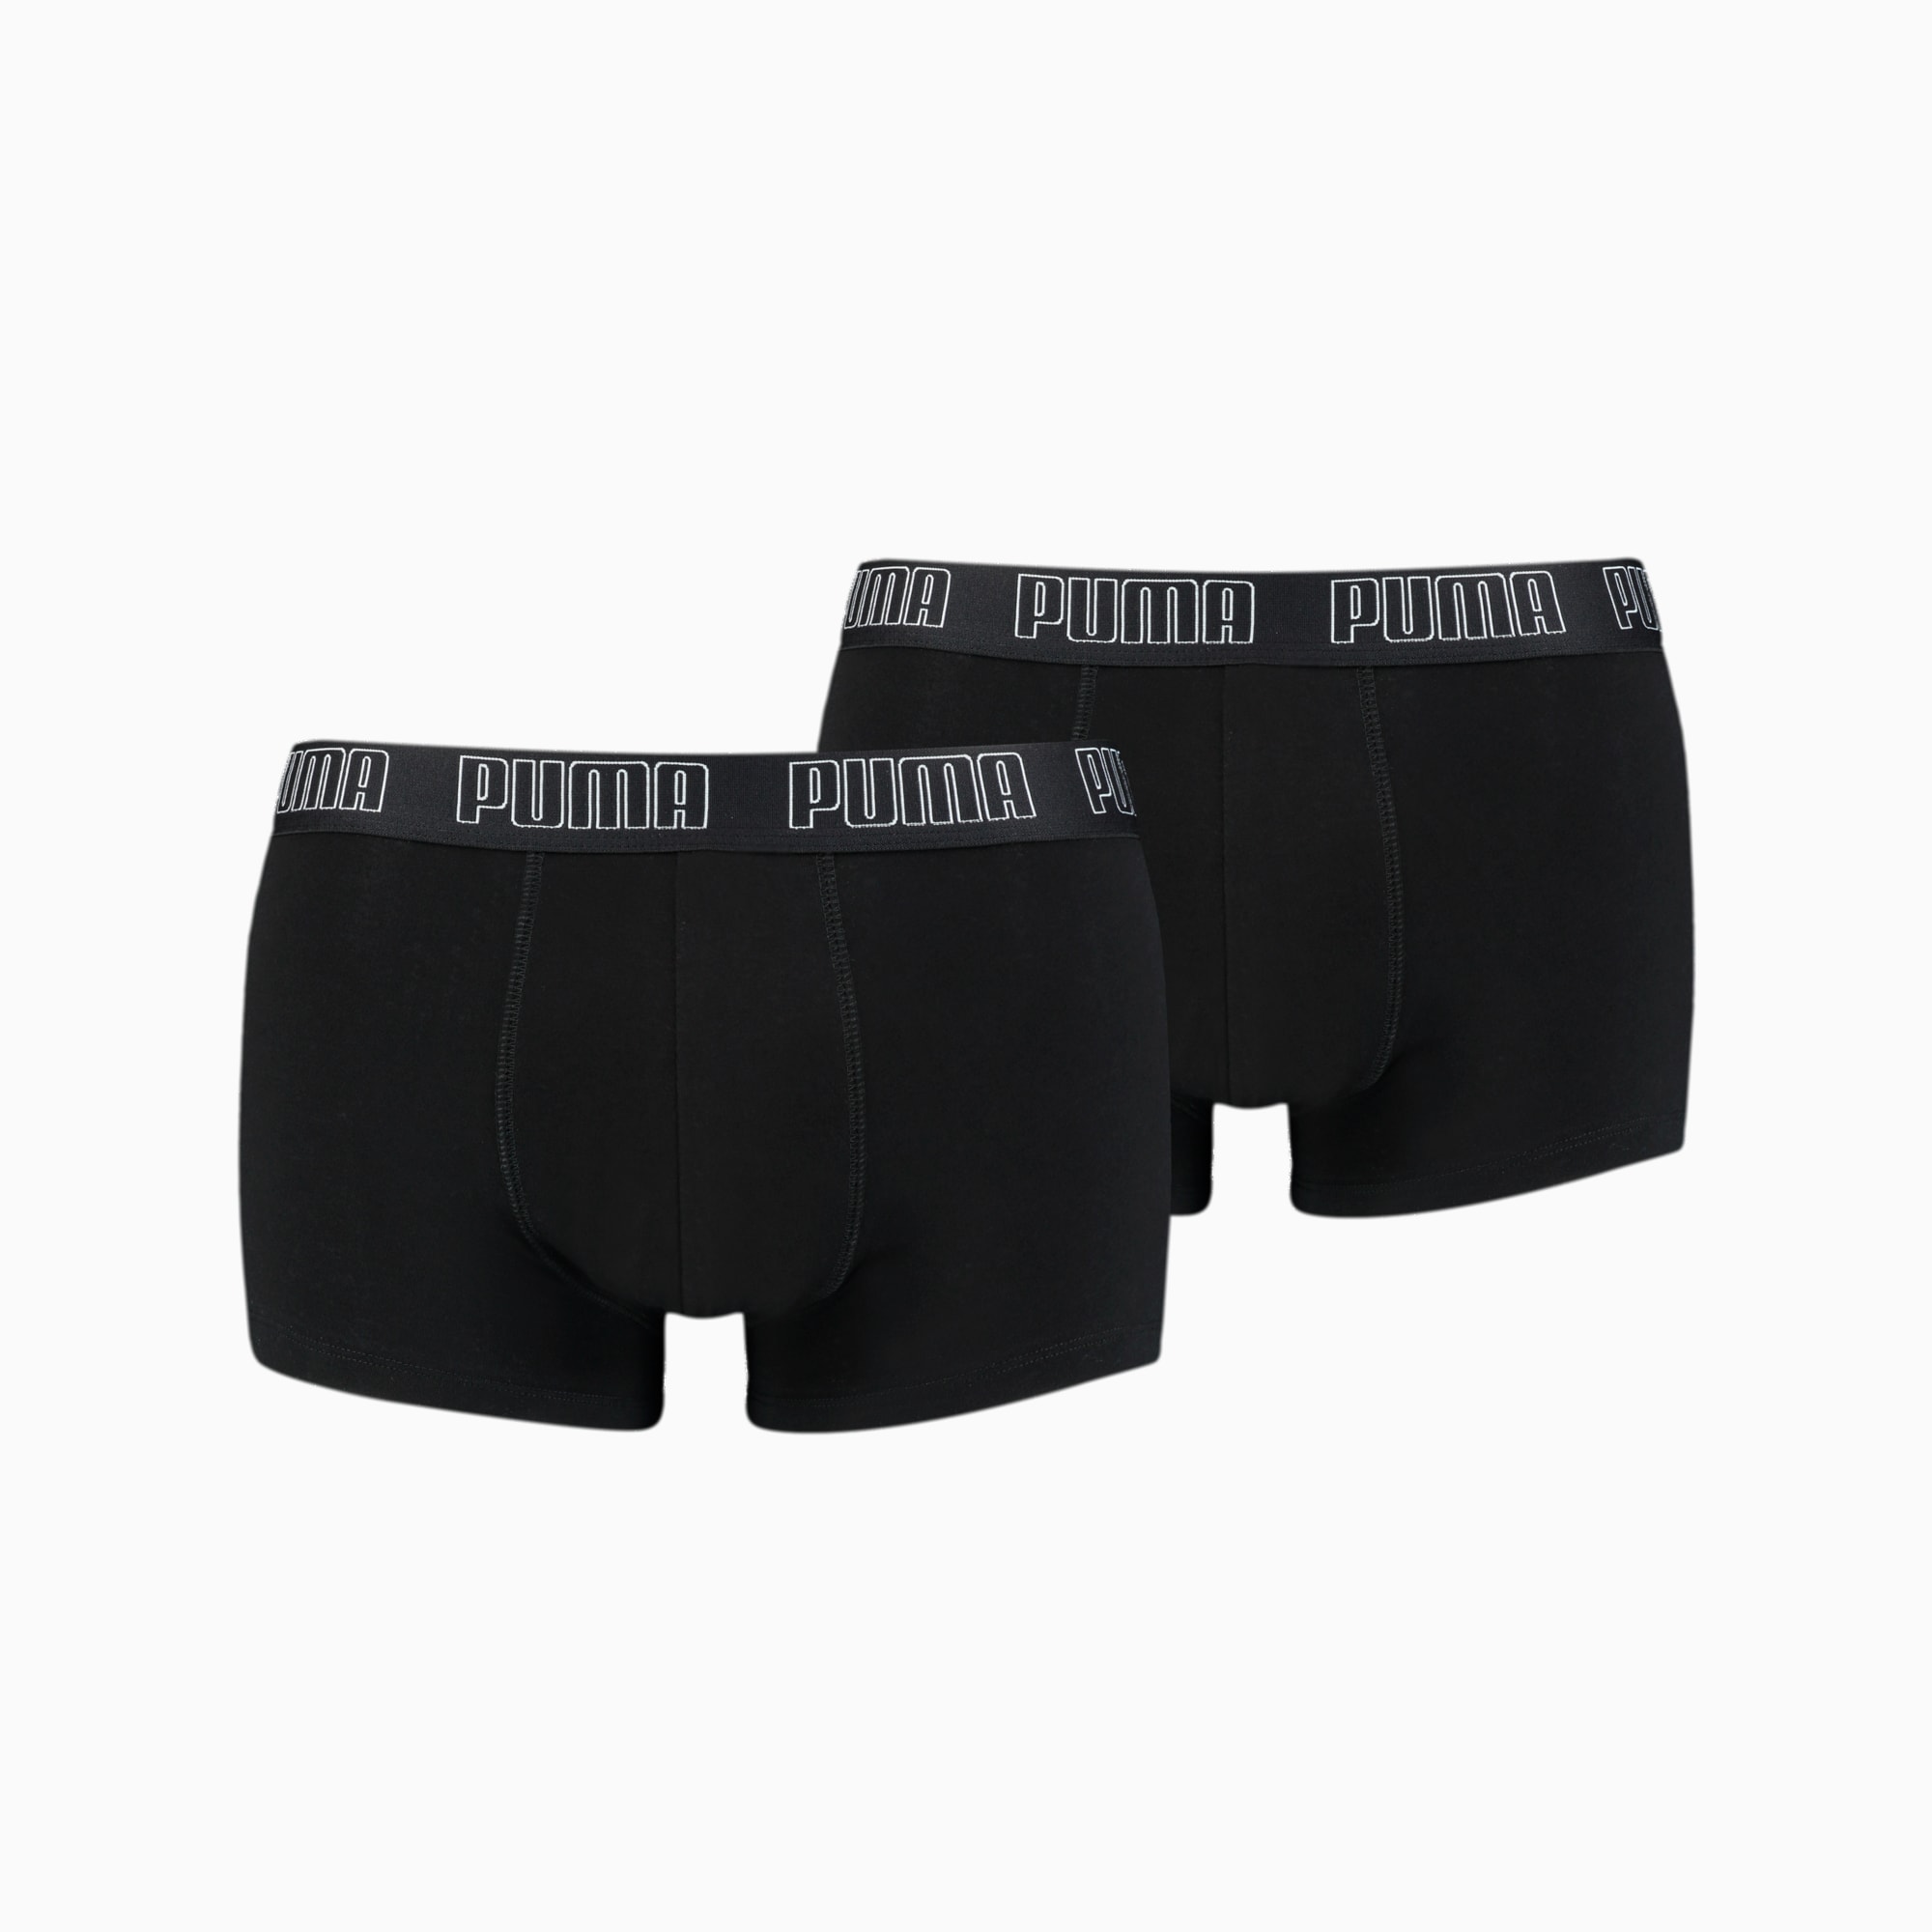 PUMA Basic Men's Trunks 2 Pack, Black, Size S, Clothing